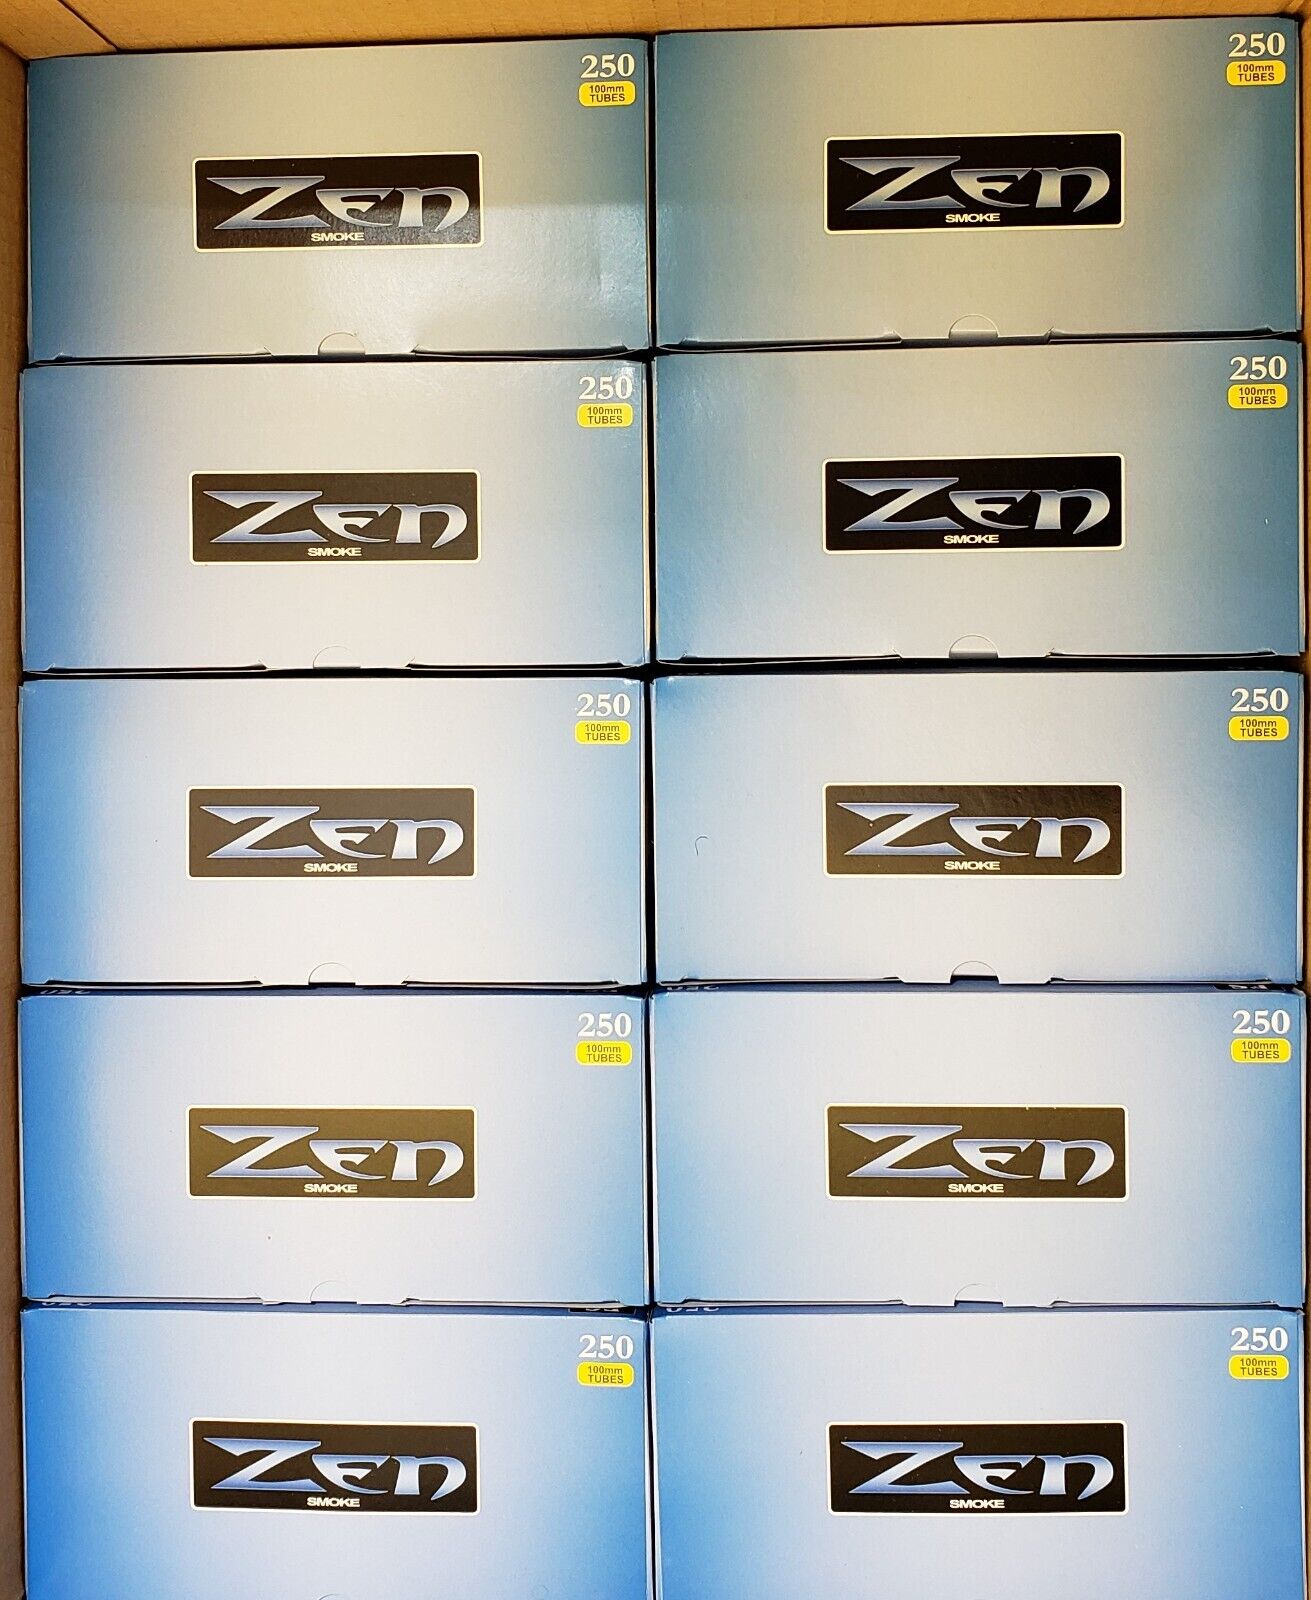 Zen Smoke White Light King Size Cigarette Filter Tubes 10 Boxes of 250 -